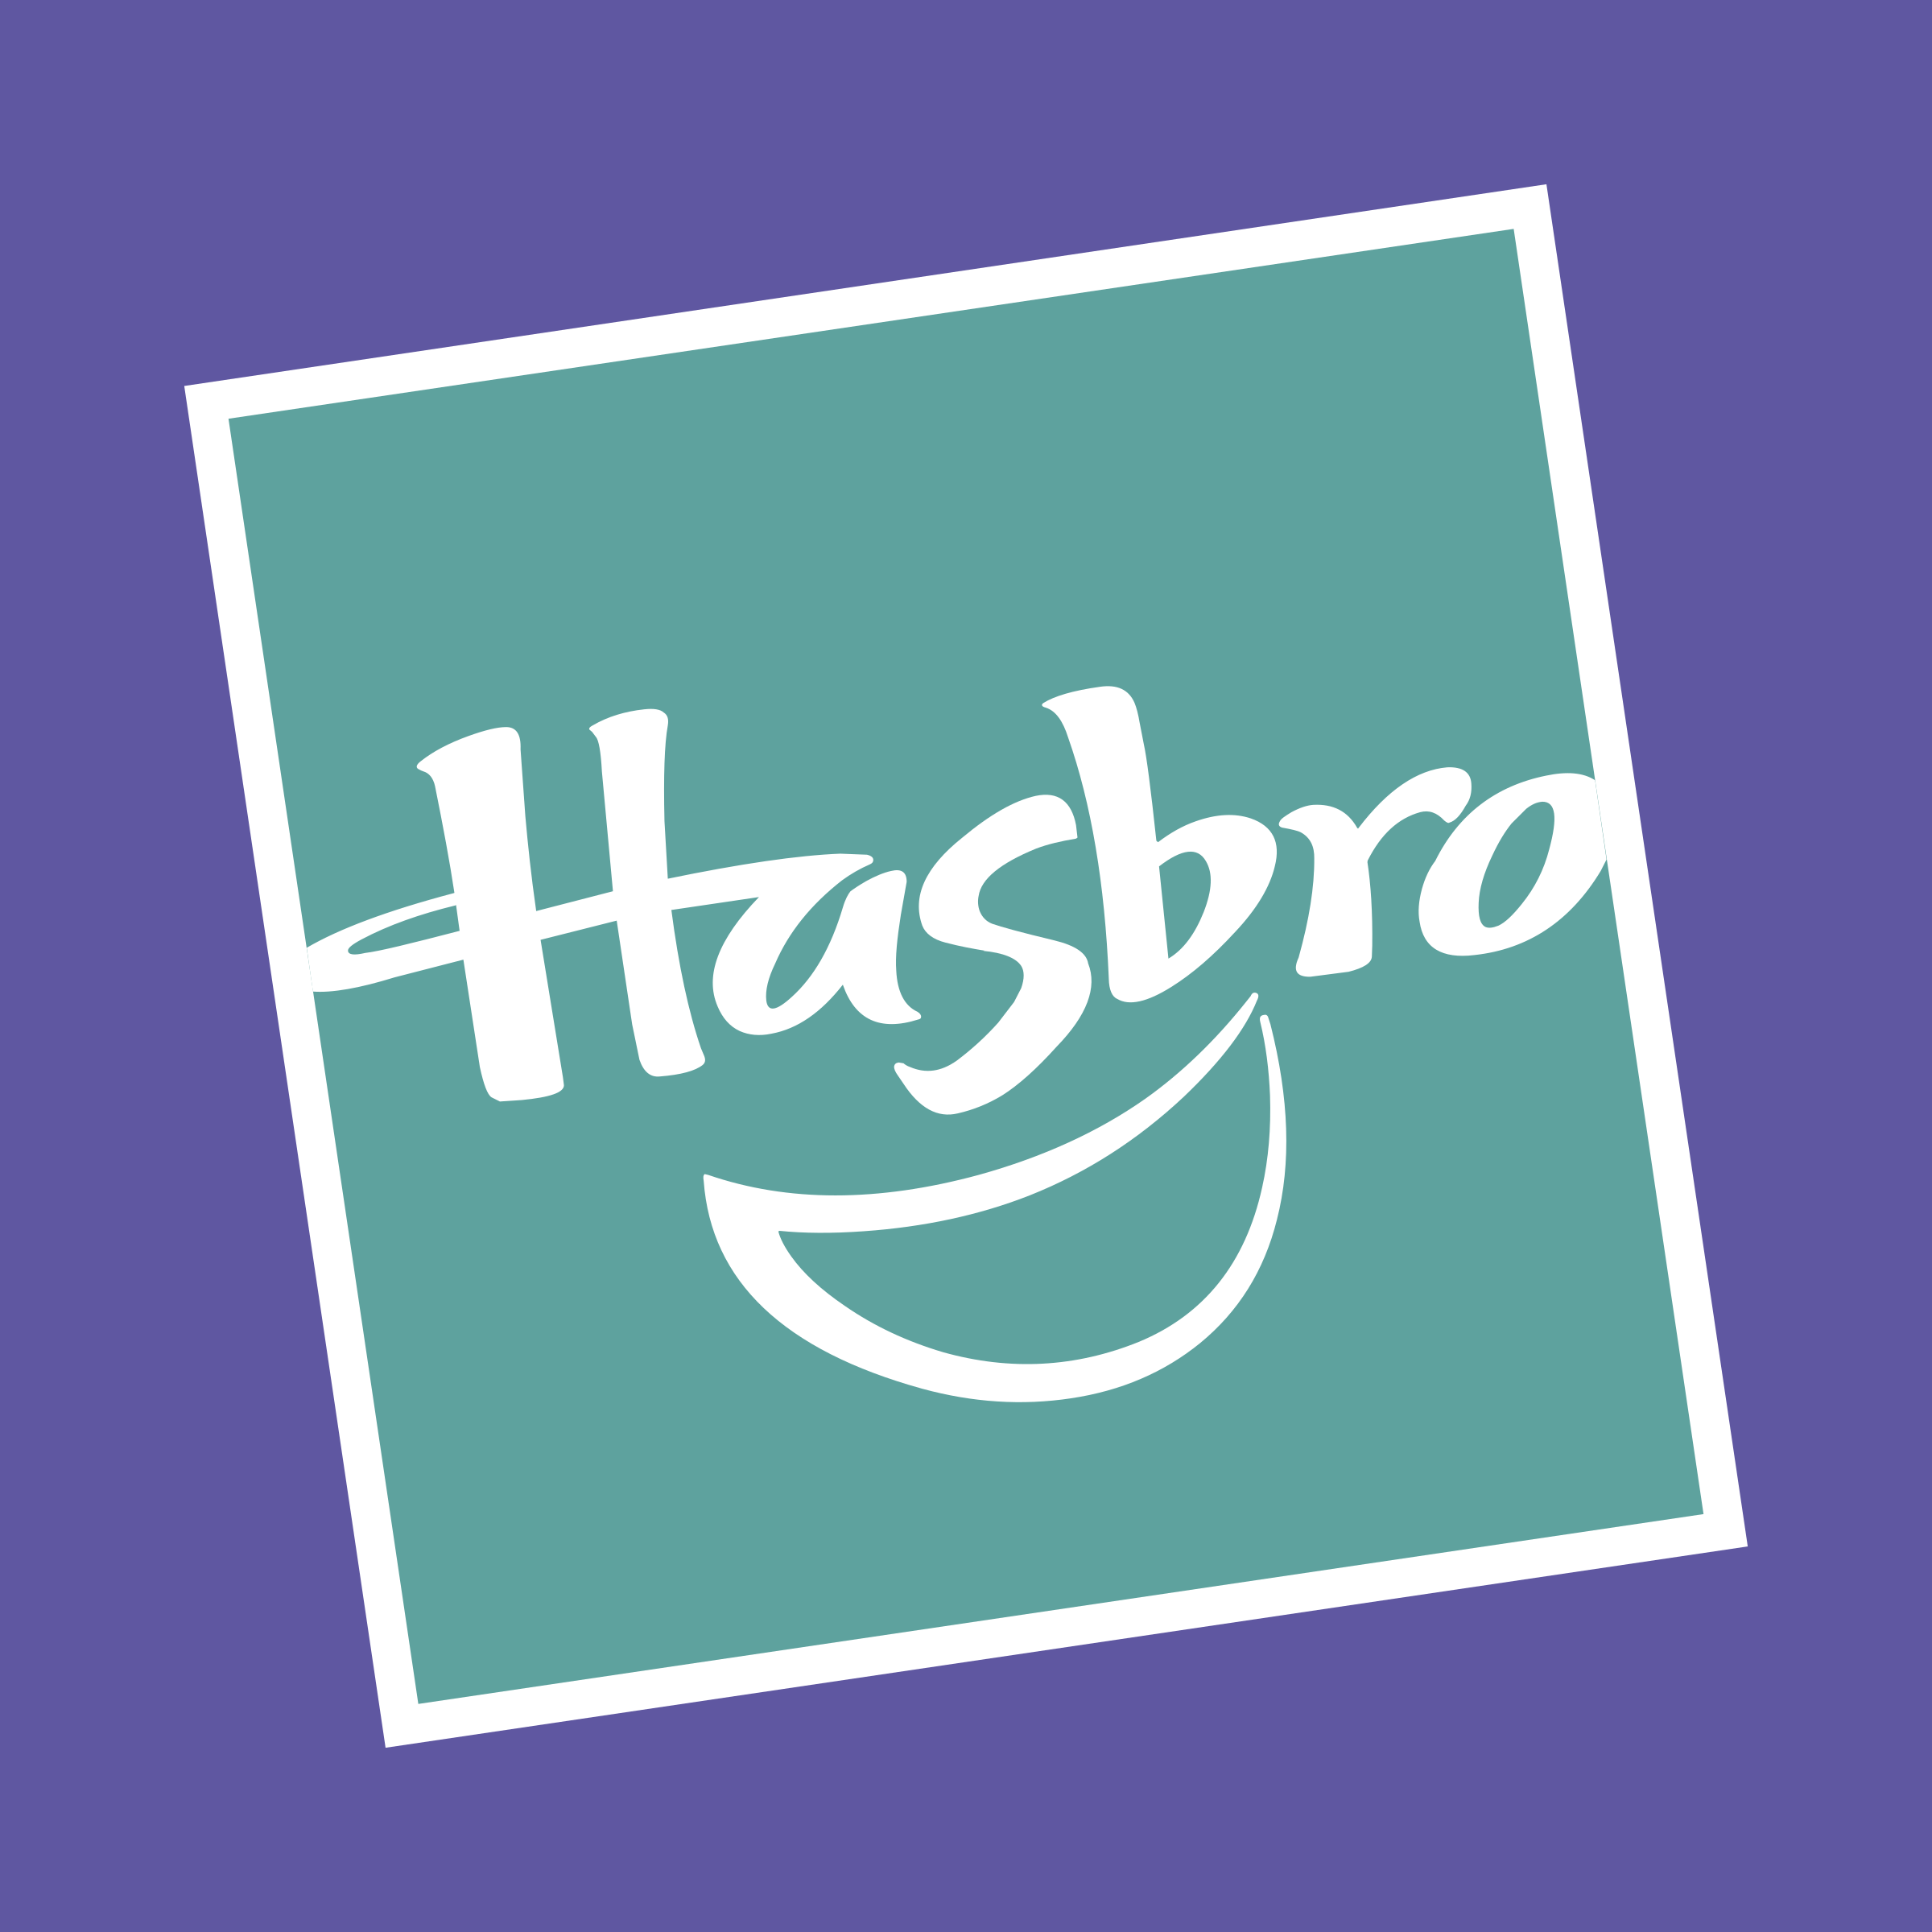 Hasbro Logo - Hasbro Logo PNG Transparent & SVG Vector - Freebie Supply